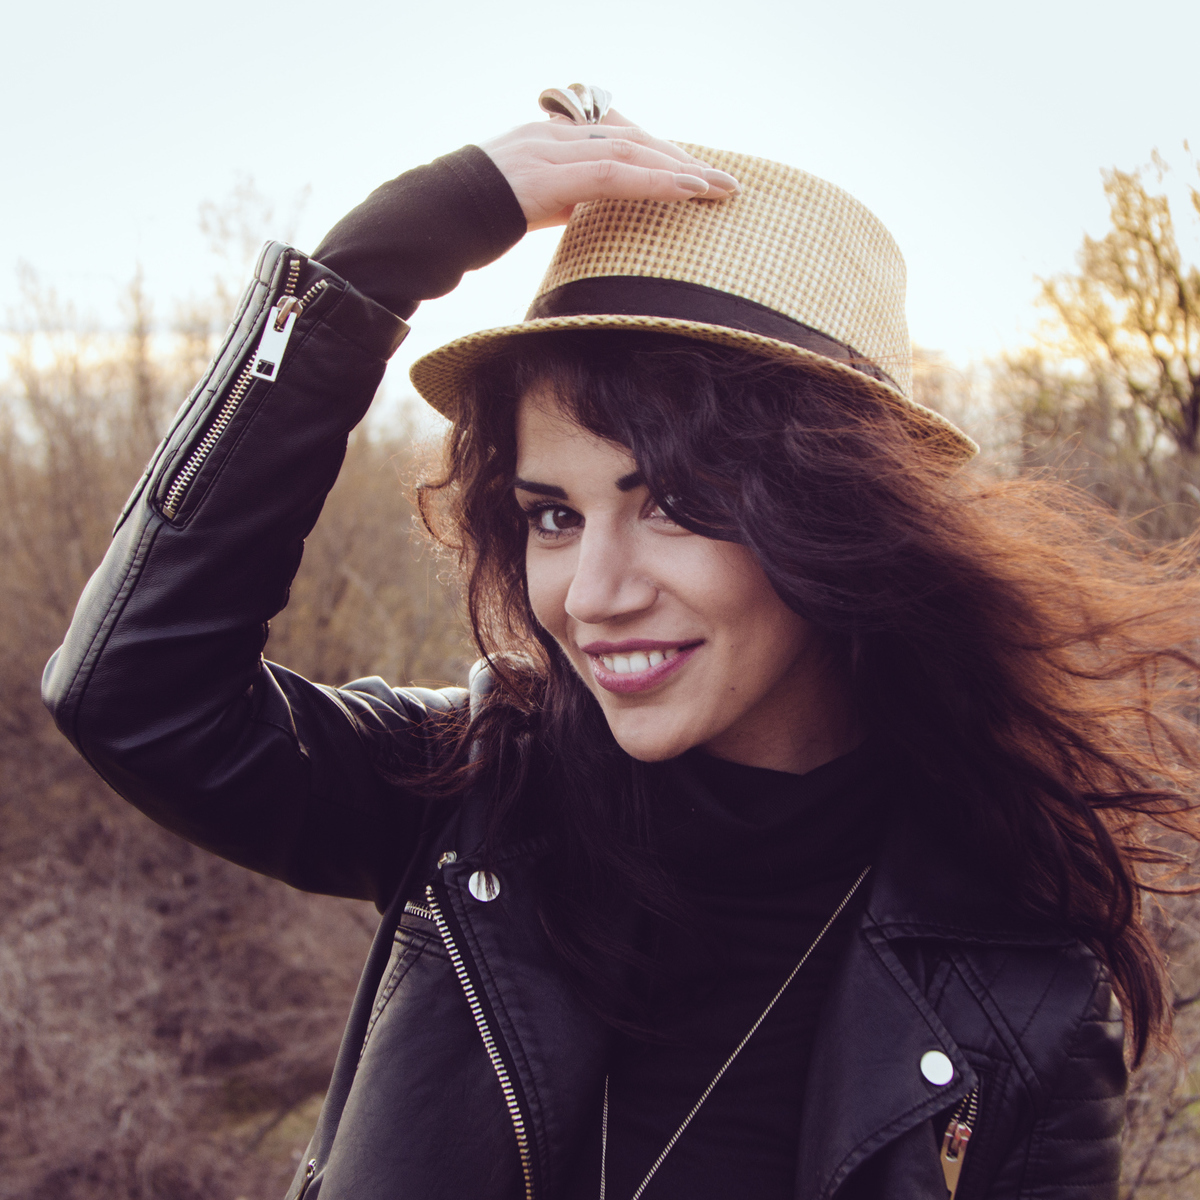 A brunette woman wearing a hat outdoors.